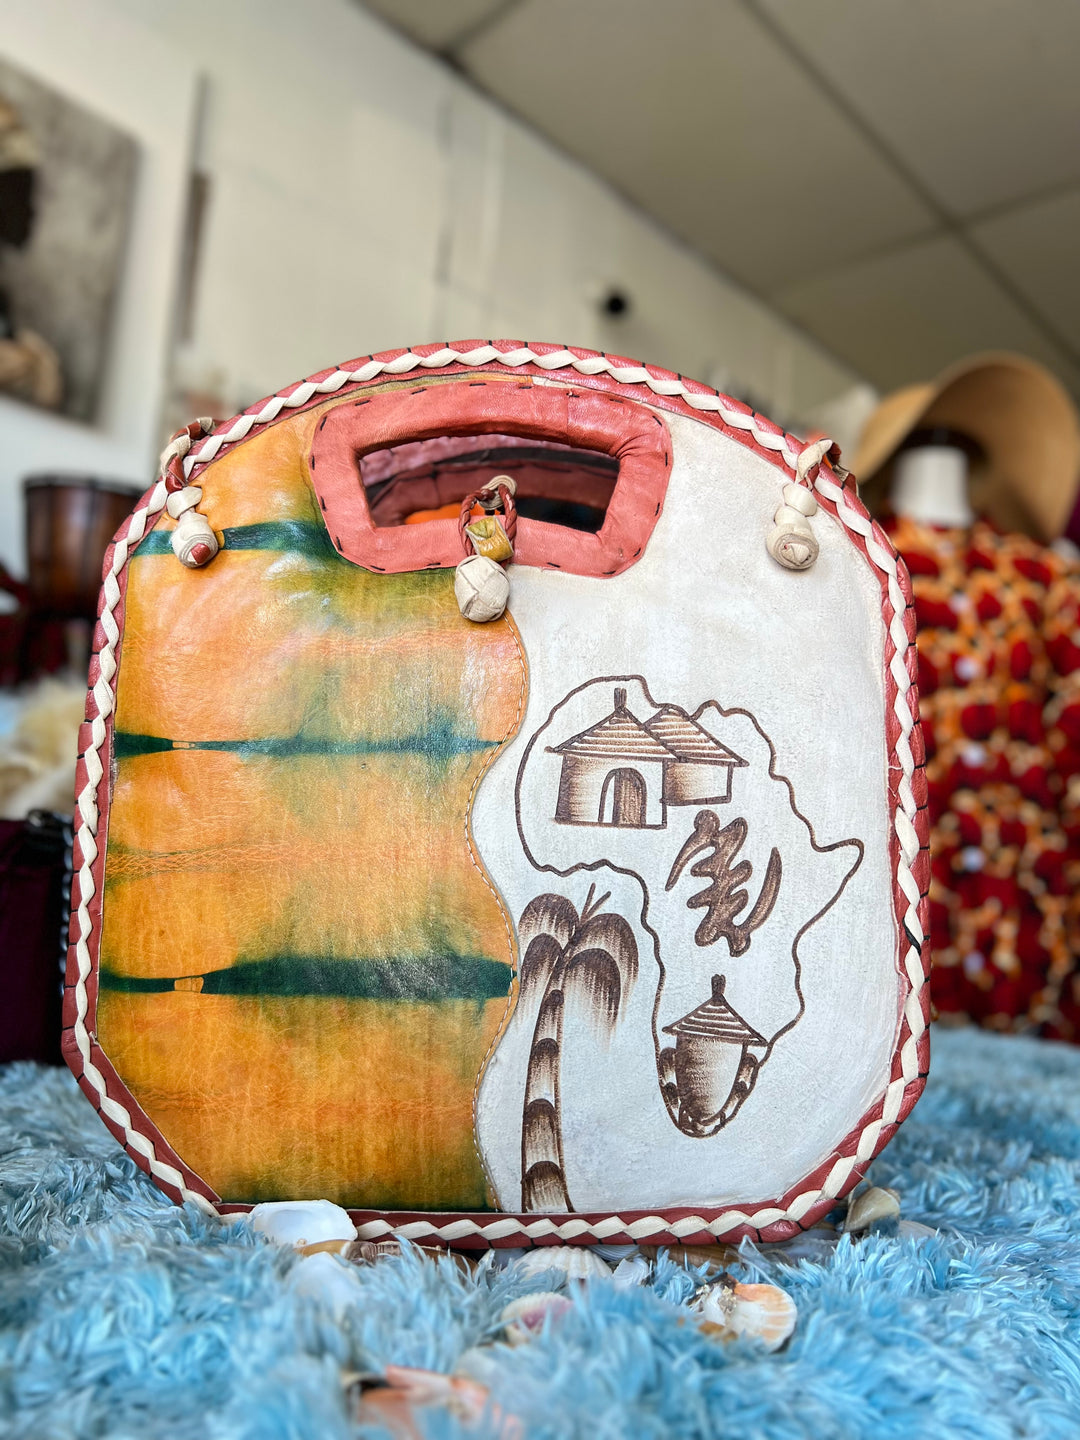 Burkina Faso 🇧🇫 handmade leather bag.🔥